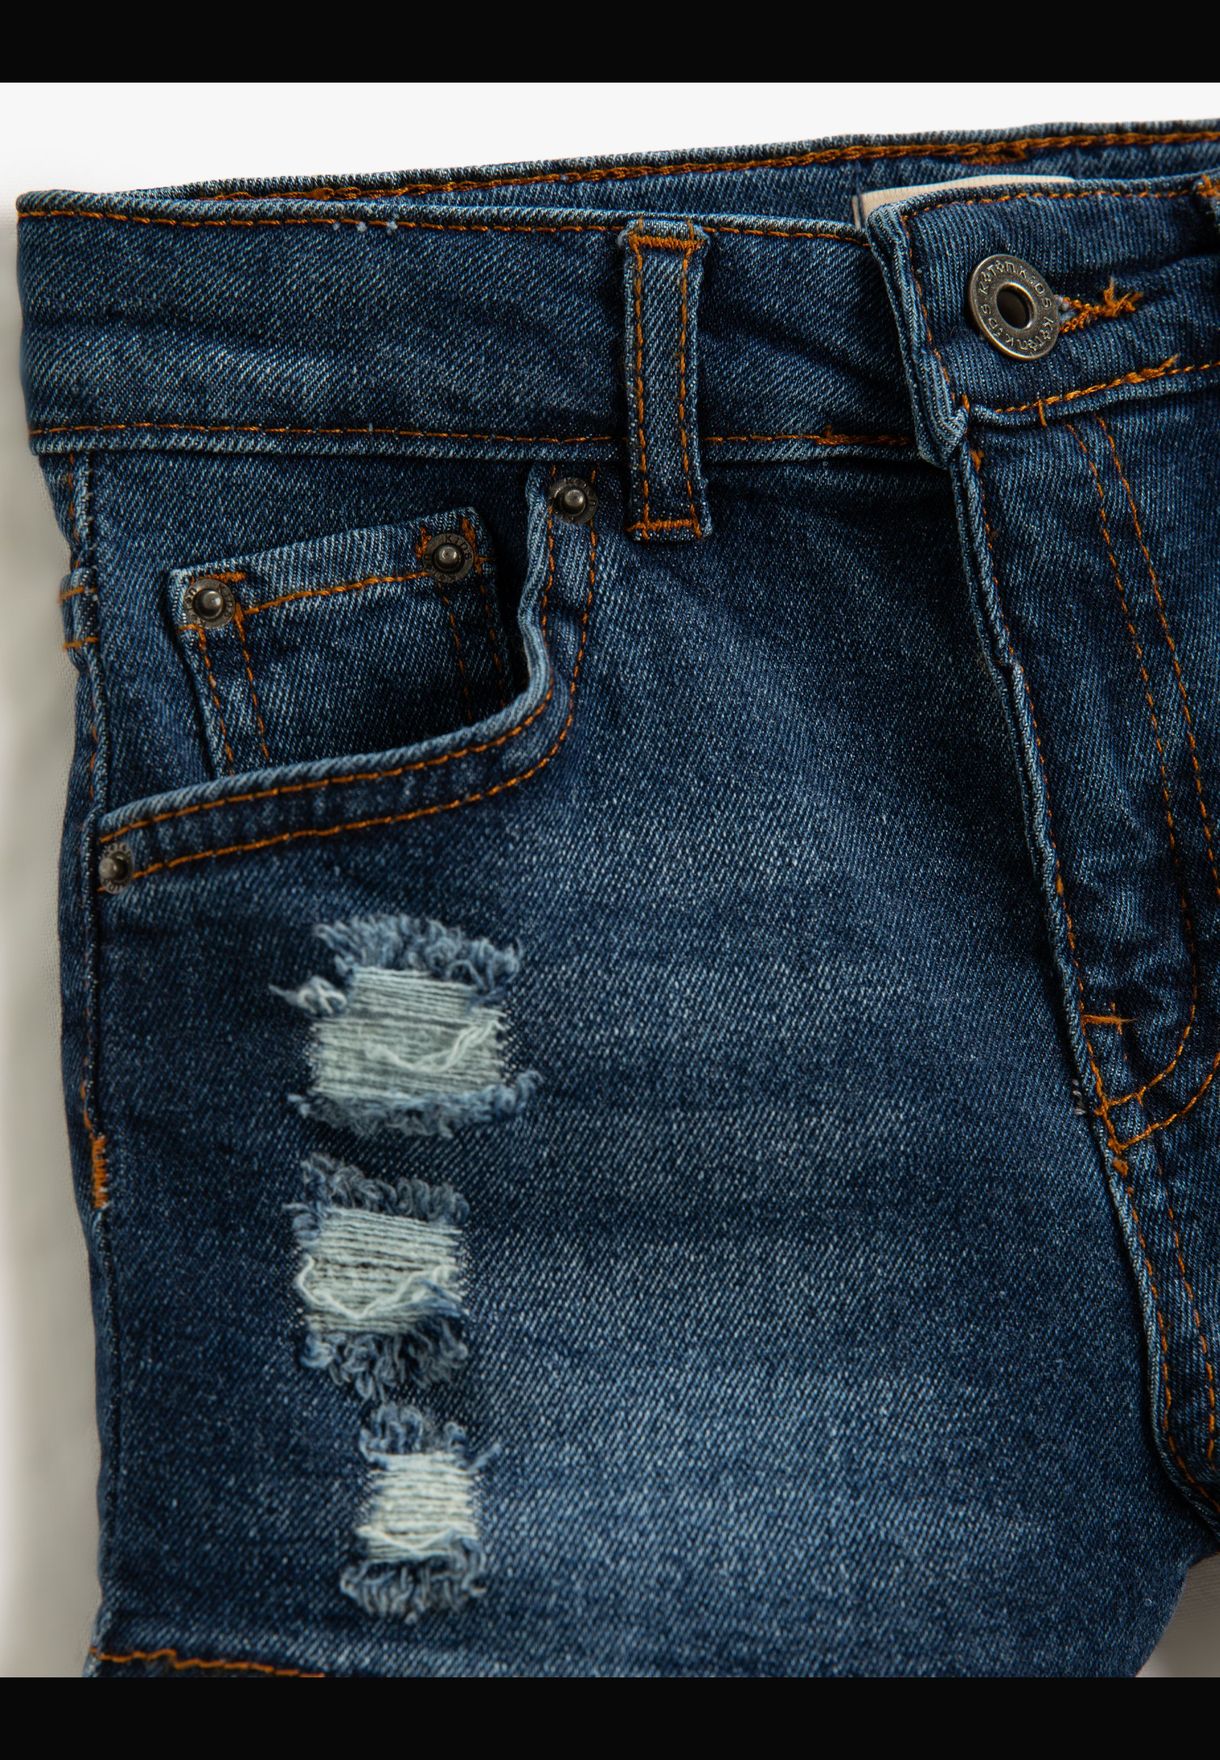 Jean Shorts Ribbed Detail Pockets Cotton